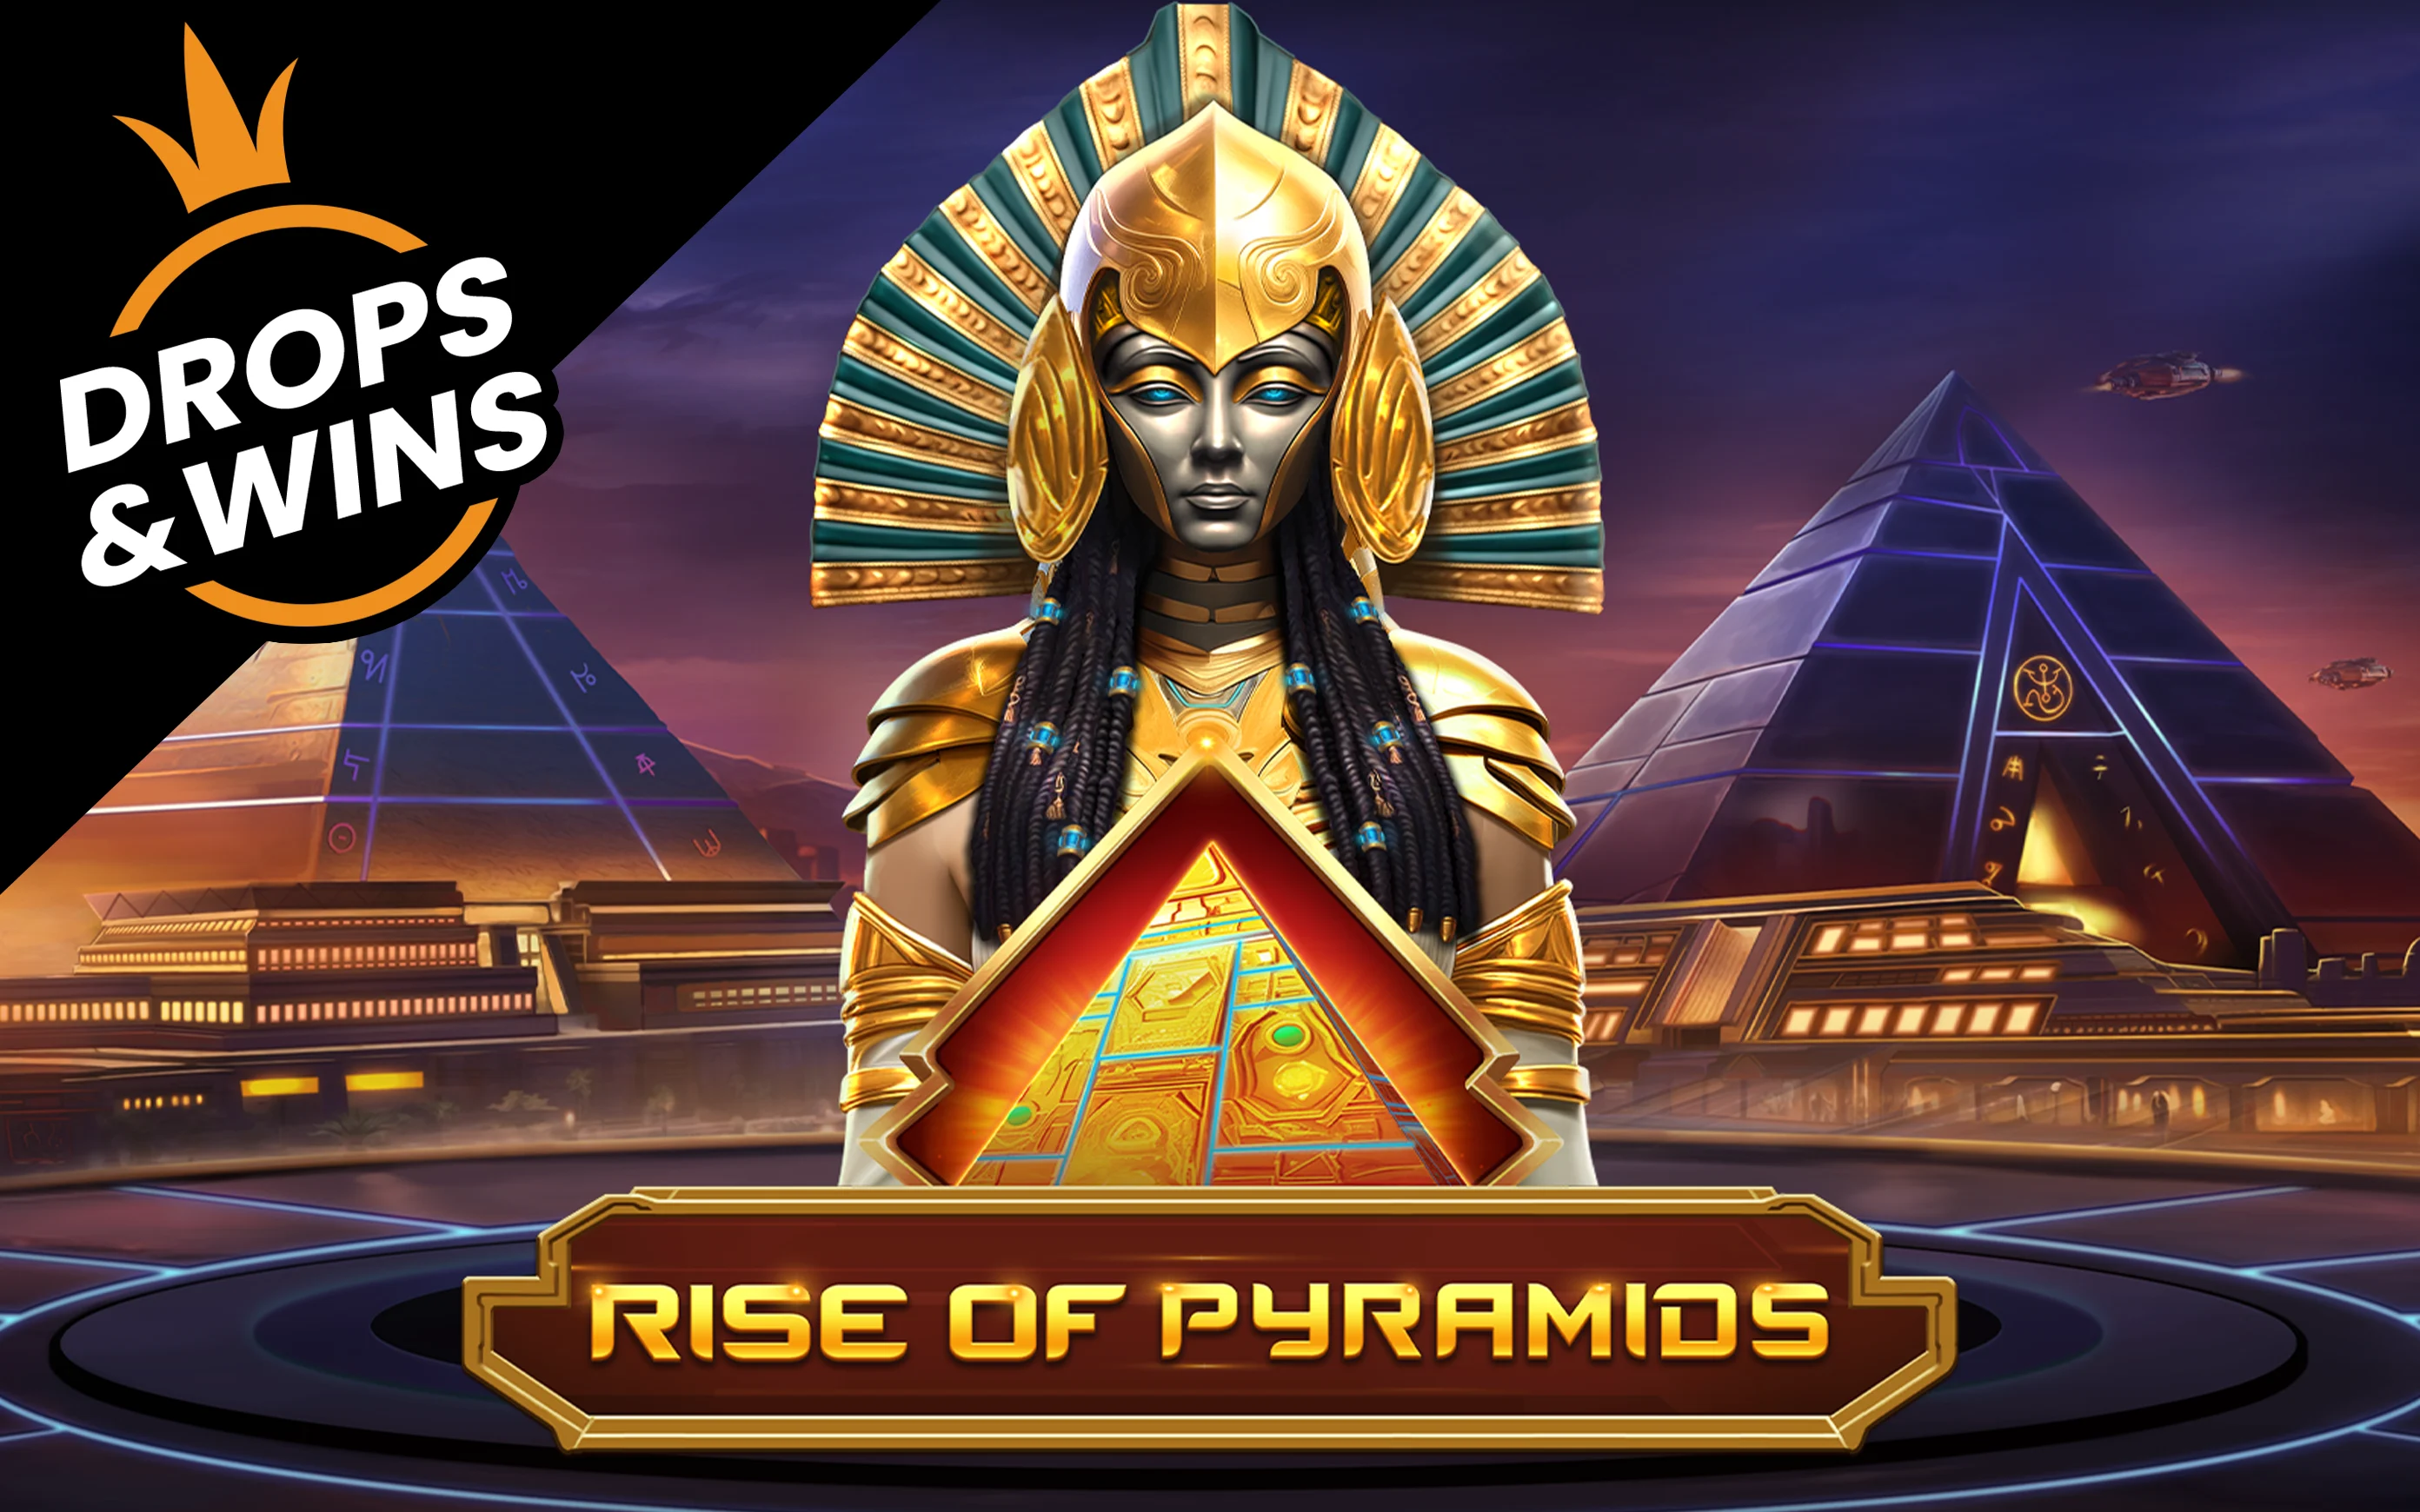 Play Rise of Pyramids on Starcasino.be online casino